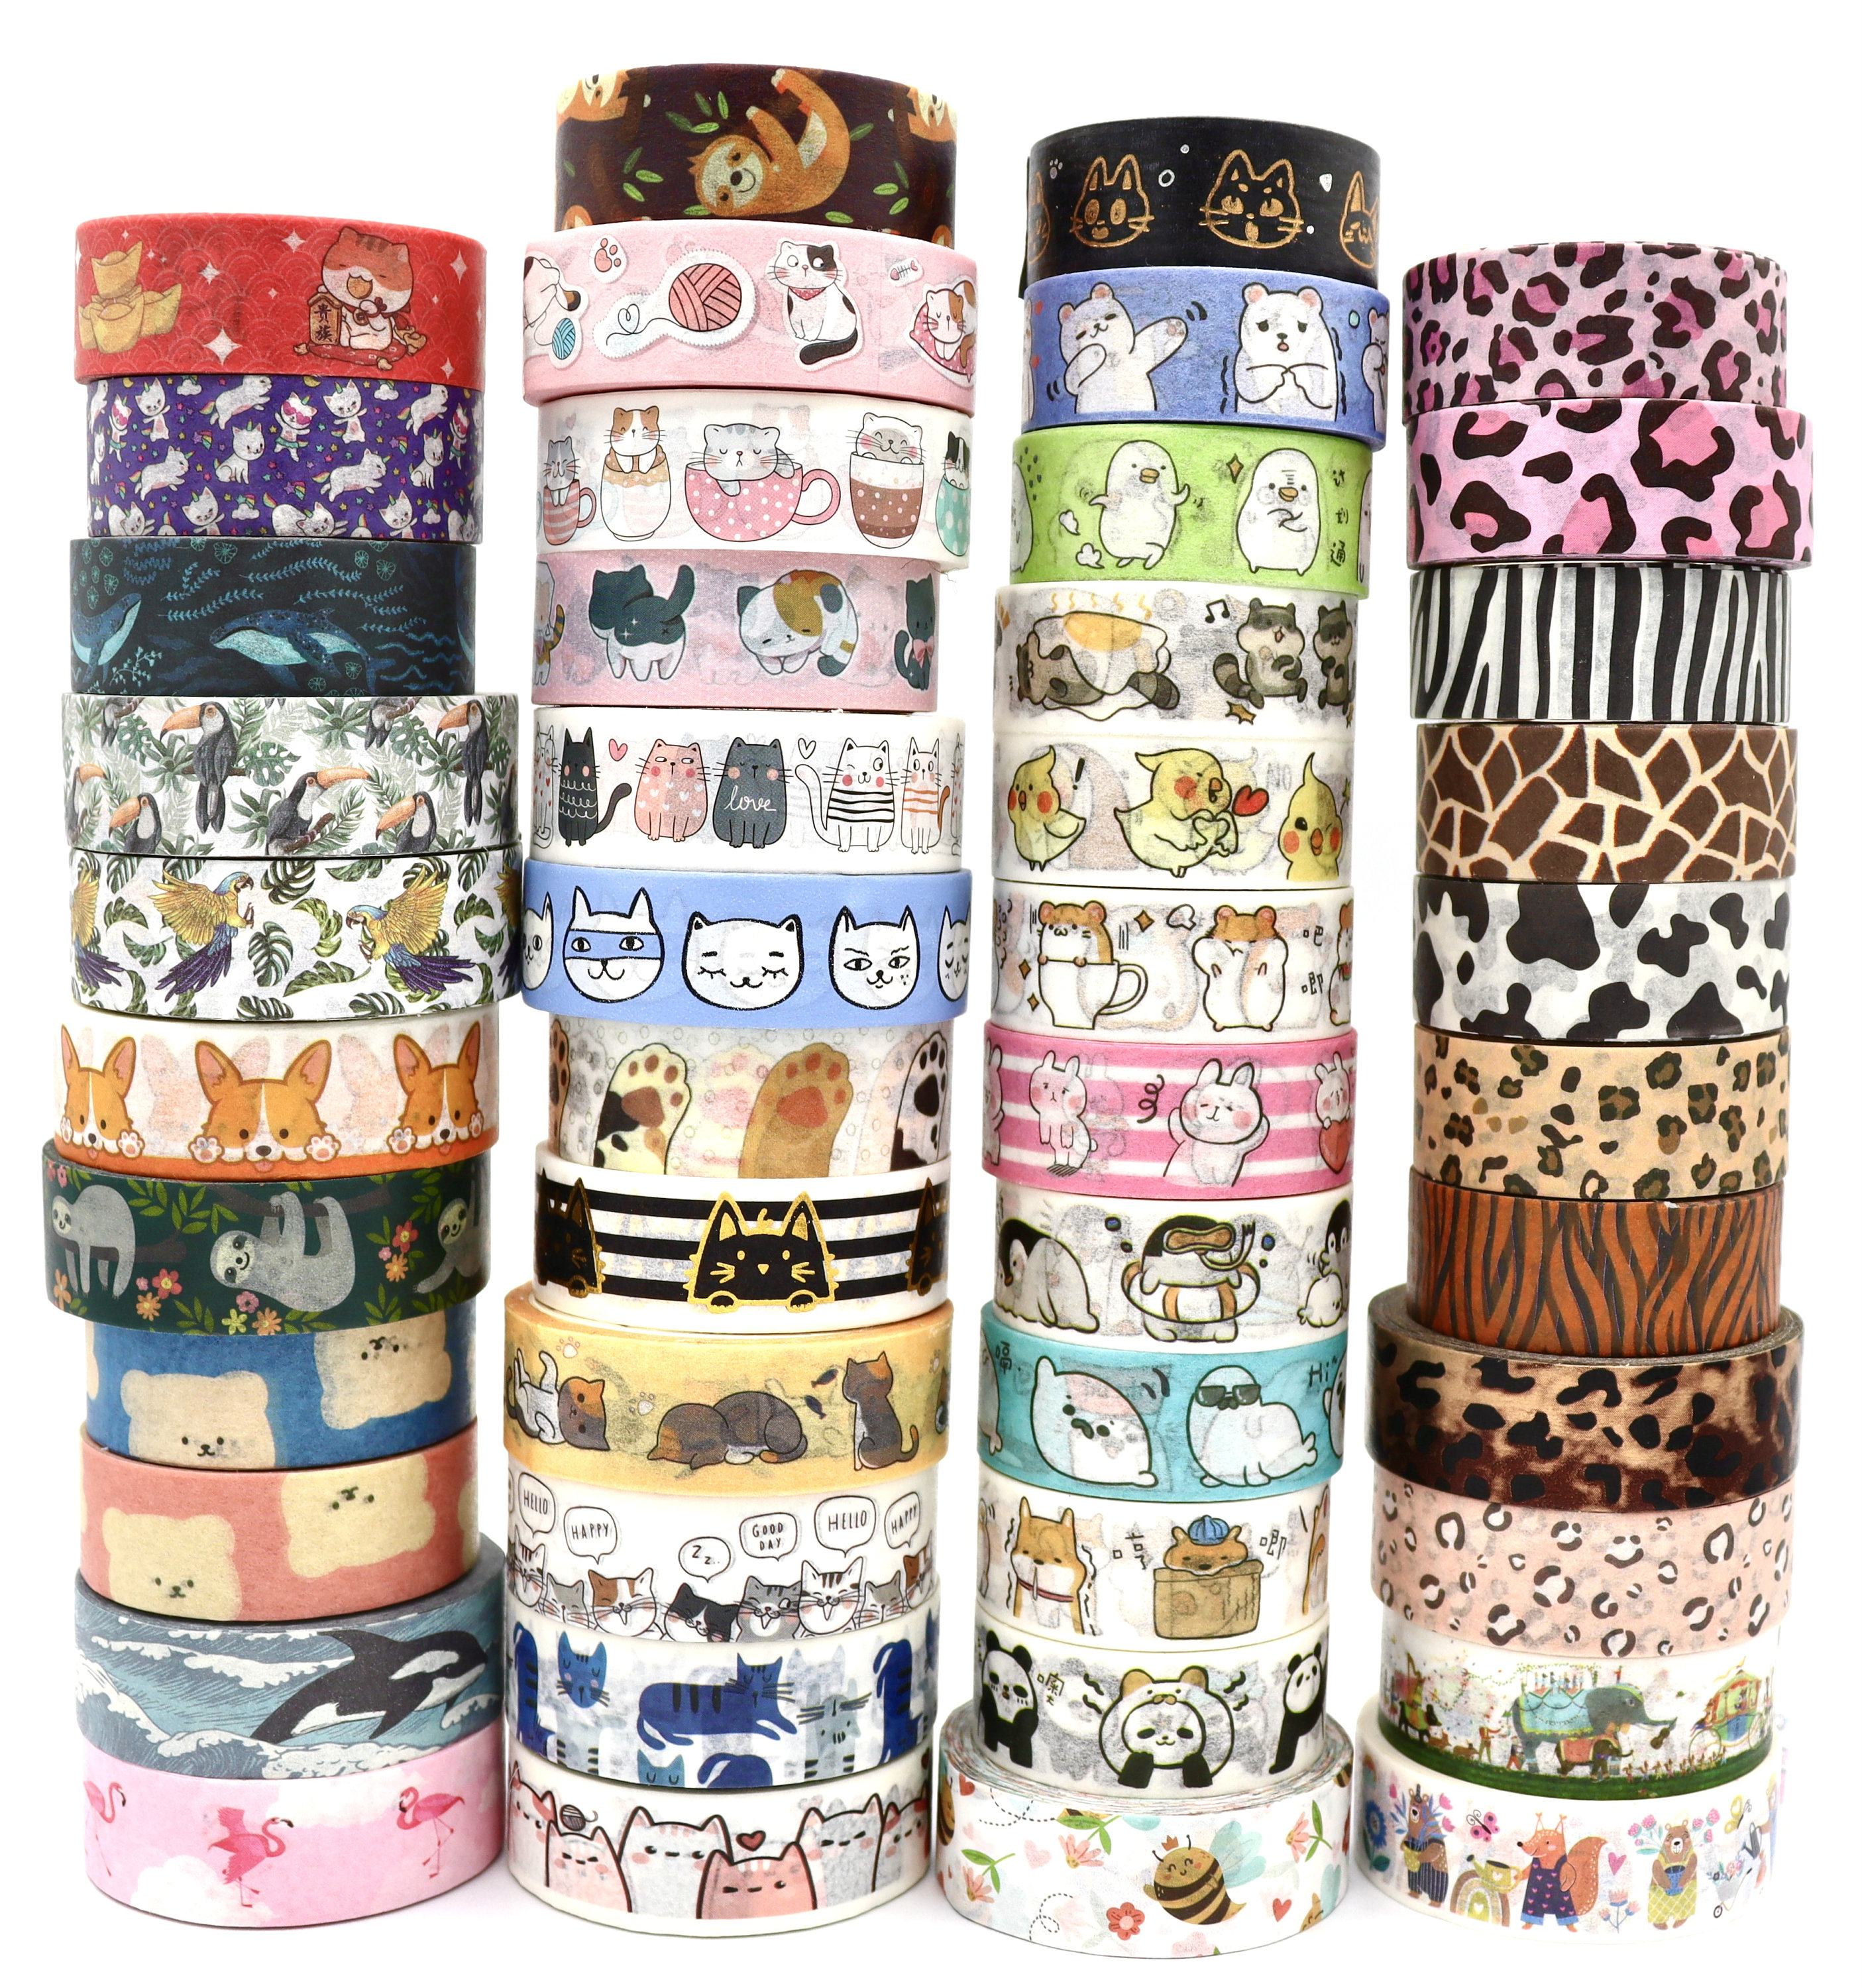 WAPETASHI Cute Washi Tape Set - 24 Rolls Kawaii Animals Gold Foil  Decorative Masking Tape for Journaling, Scrapbooking, Kids DIY Crafts, Gift  Wrapping, Aesthetic Supplies, Planners, Bullet Journal